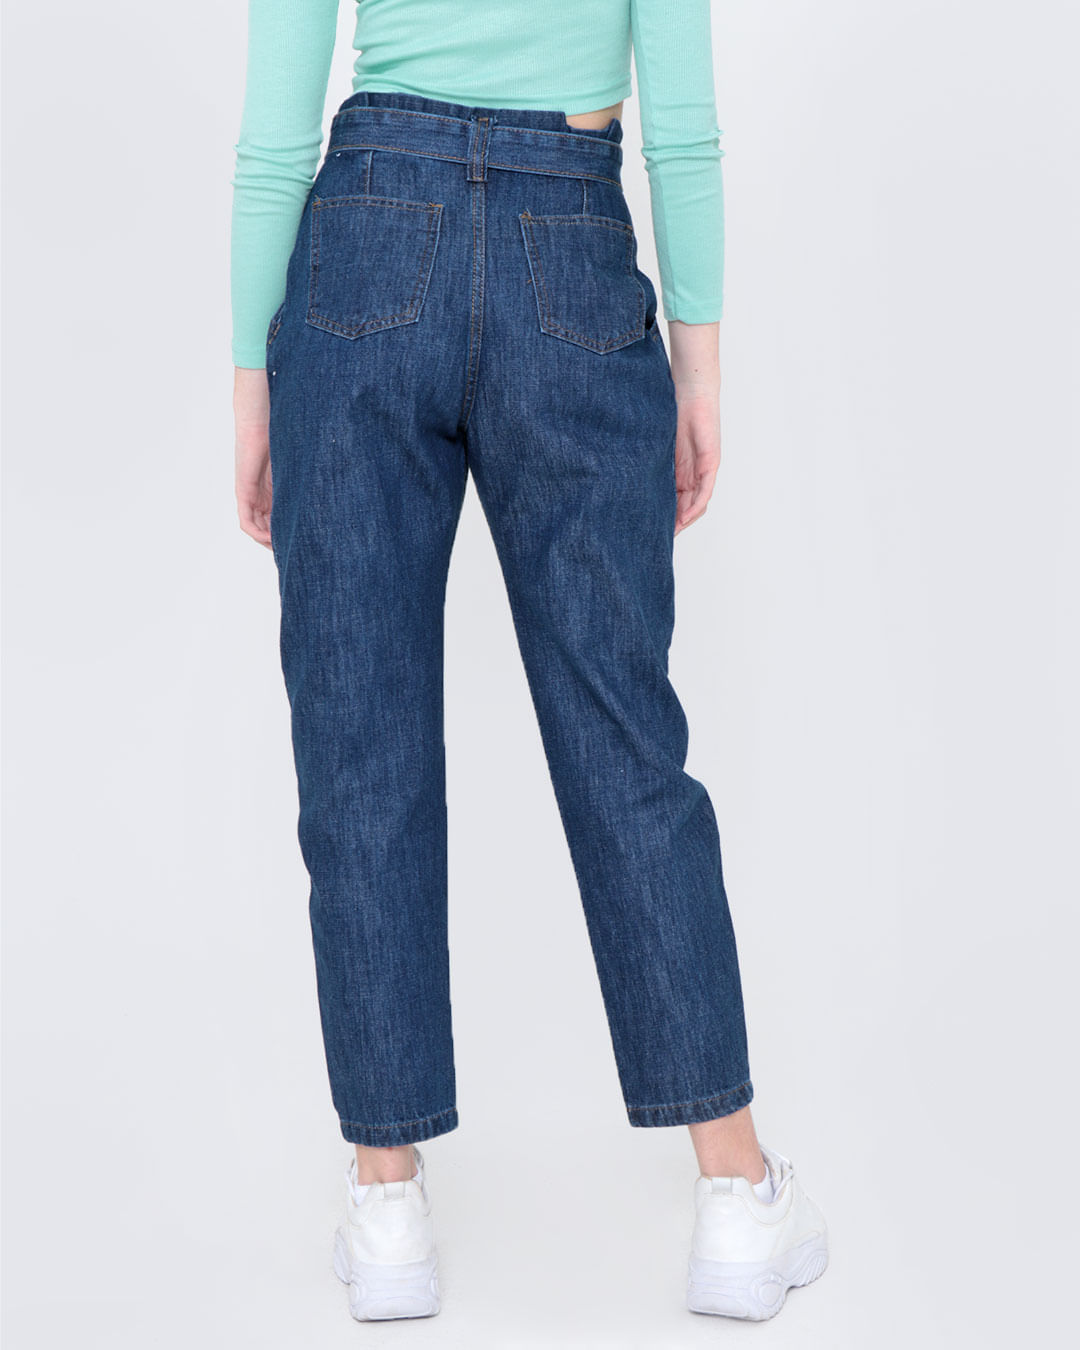 Calca-Jeans-Juvenil-Clochard-Azul-Escuro